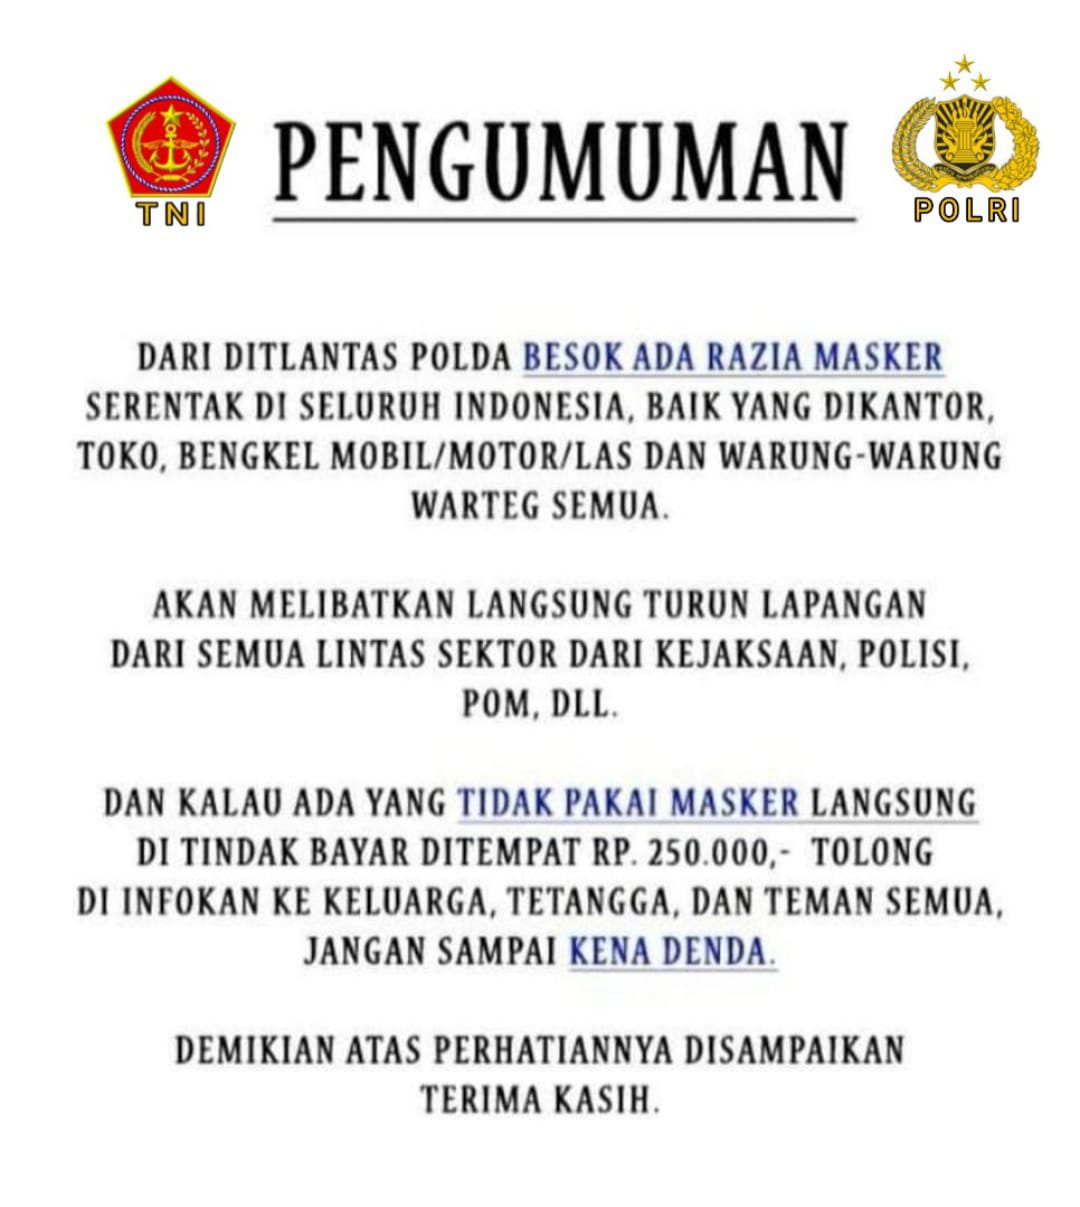 [HOAKS] Pengumuman Razia Masker Oleh TNI Polri Denda 250.000